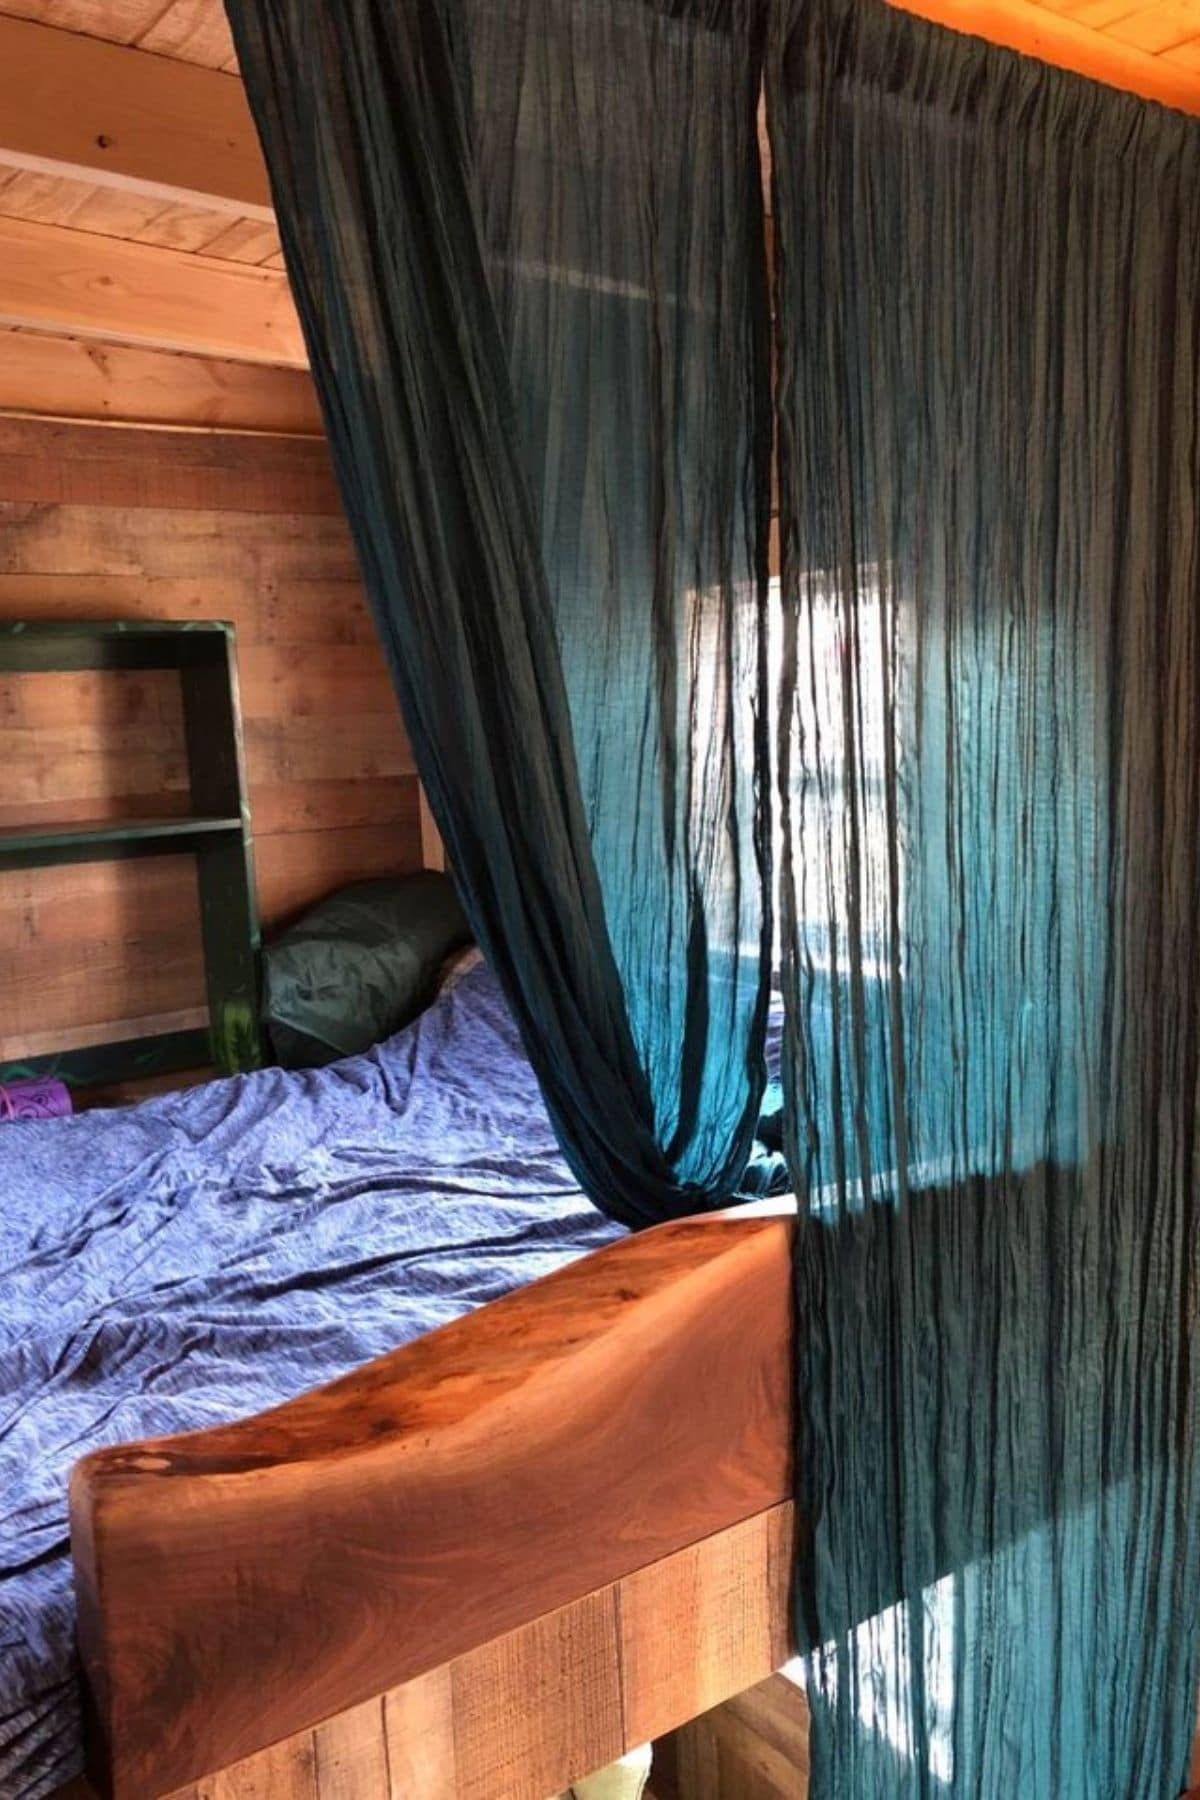 teal curtain on ceiling hiding loft sleeping space behind it